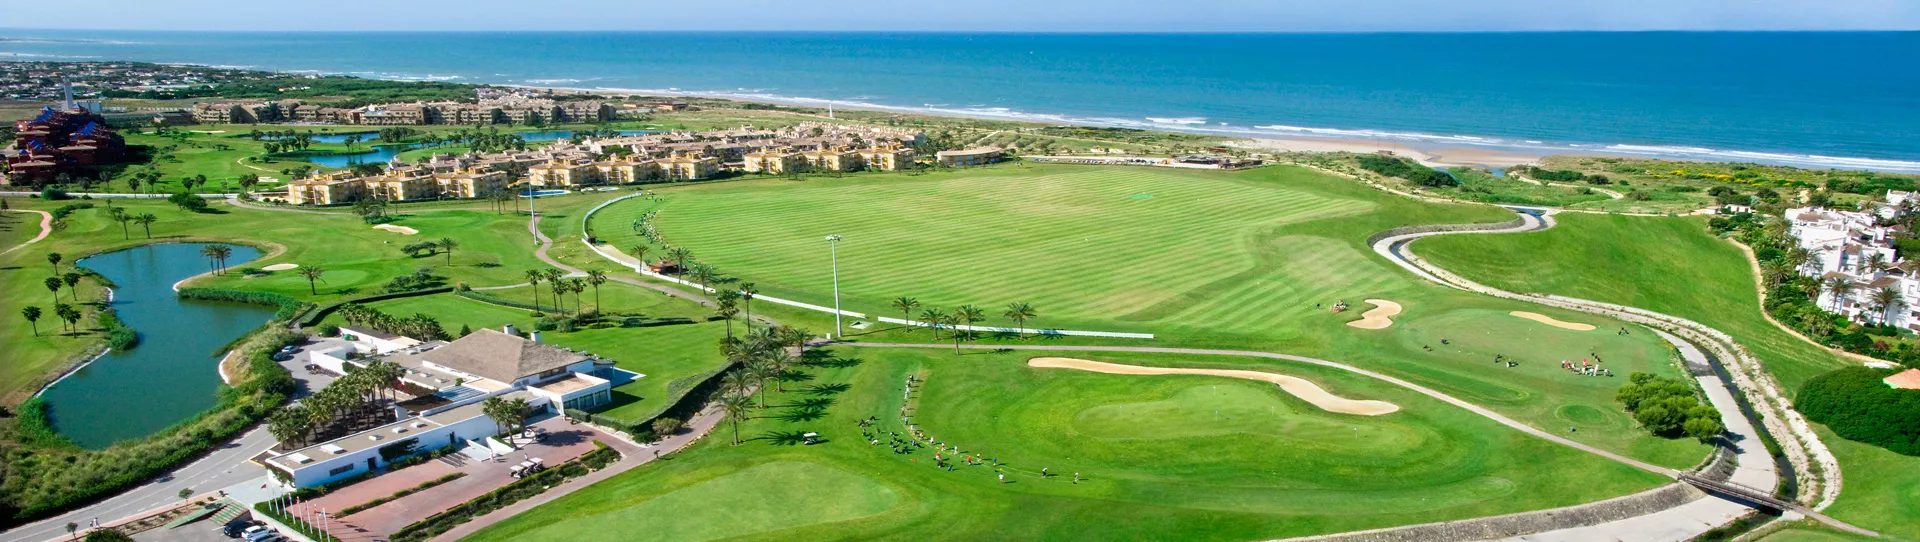 Spain Golf Driving Range - Costa Ballena Golf Course Practice area - Photo 2